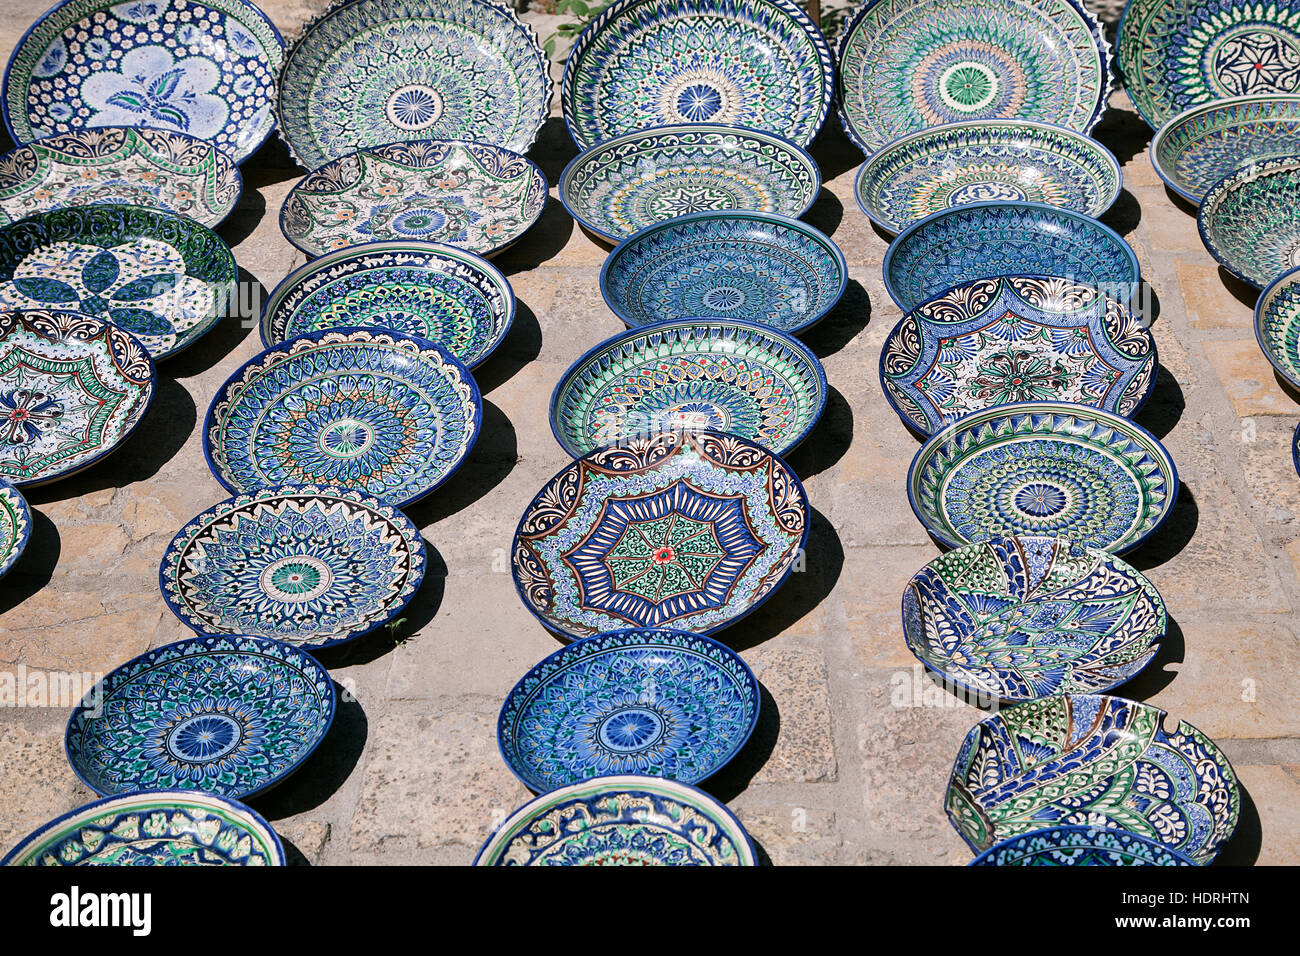 Traditional ceramic dishware in a street market, Uzbekistan Stock Photo